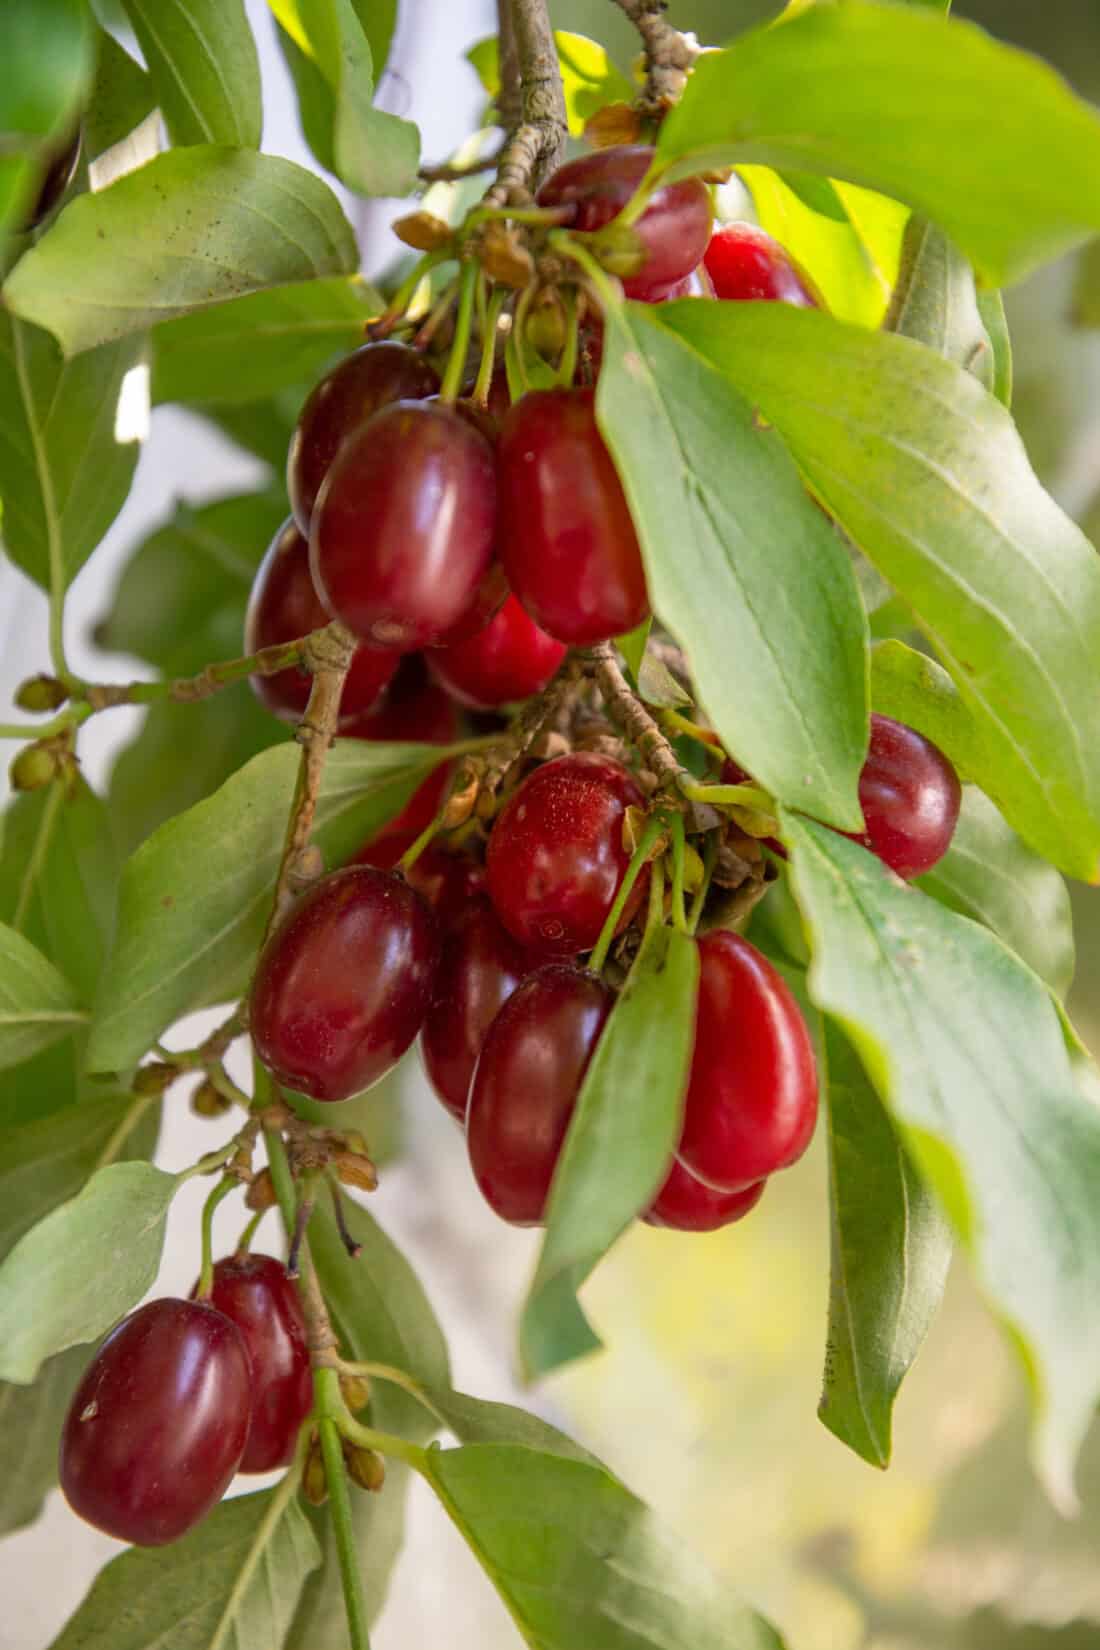 Ripe cornelian cherries on a tree branch.